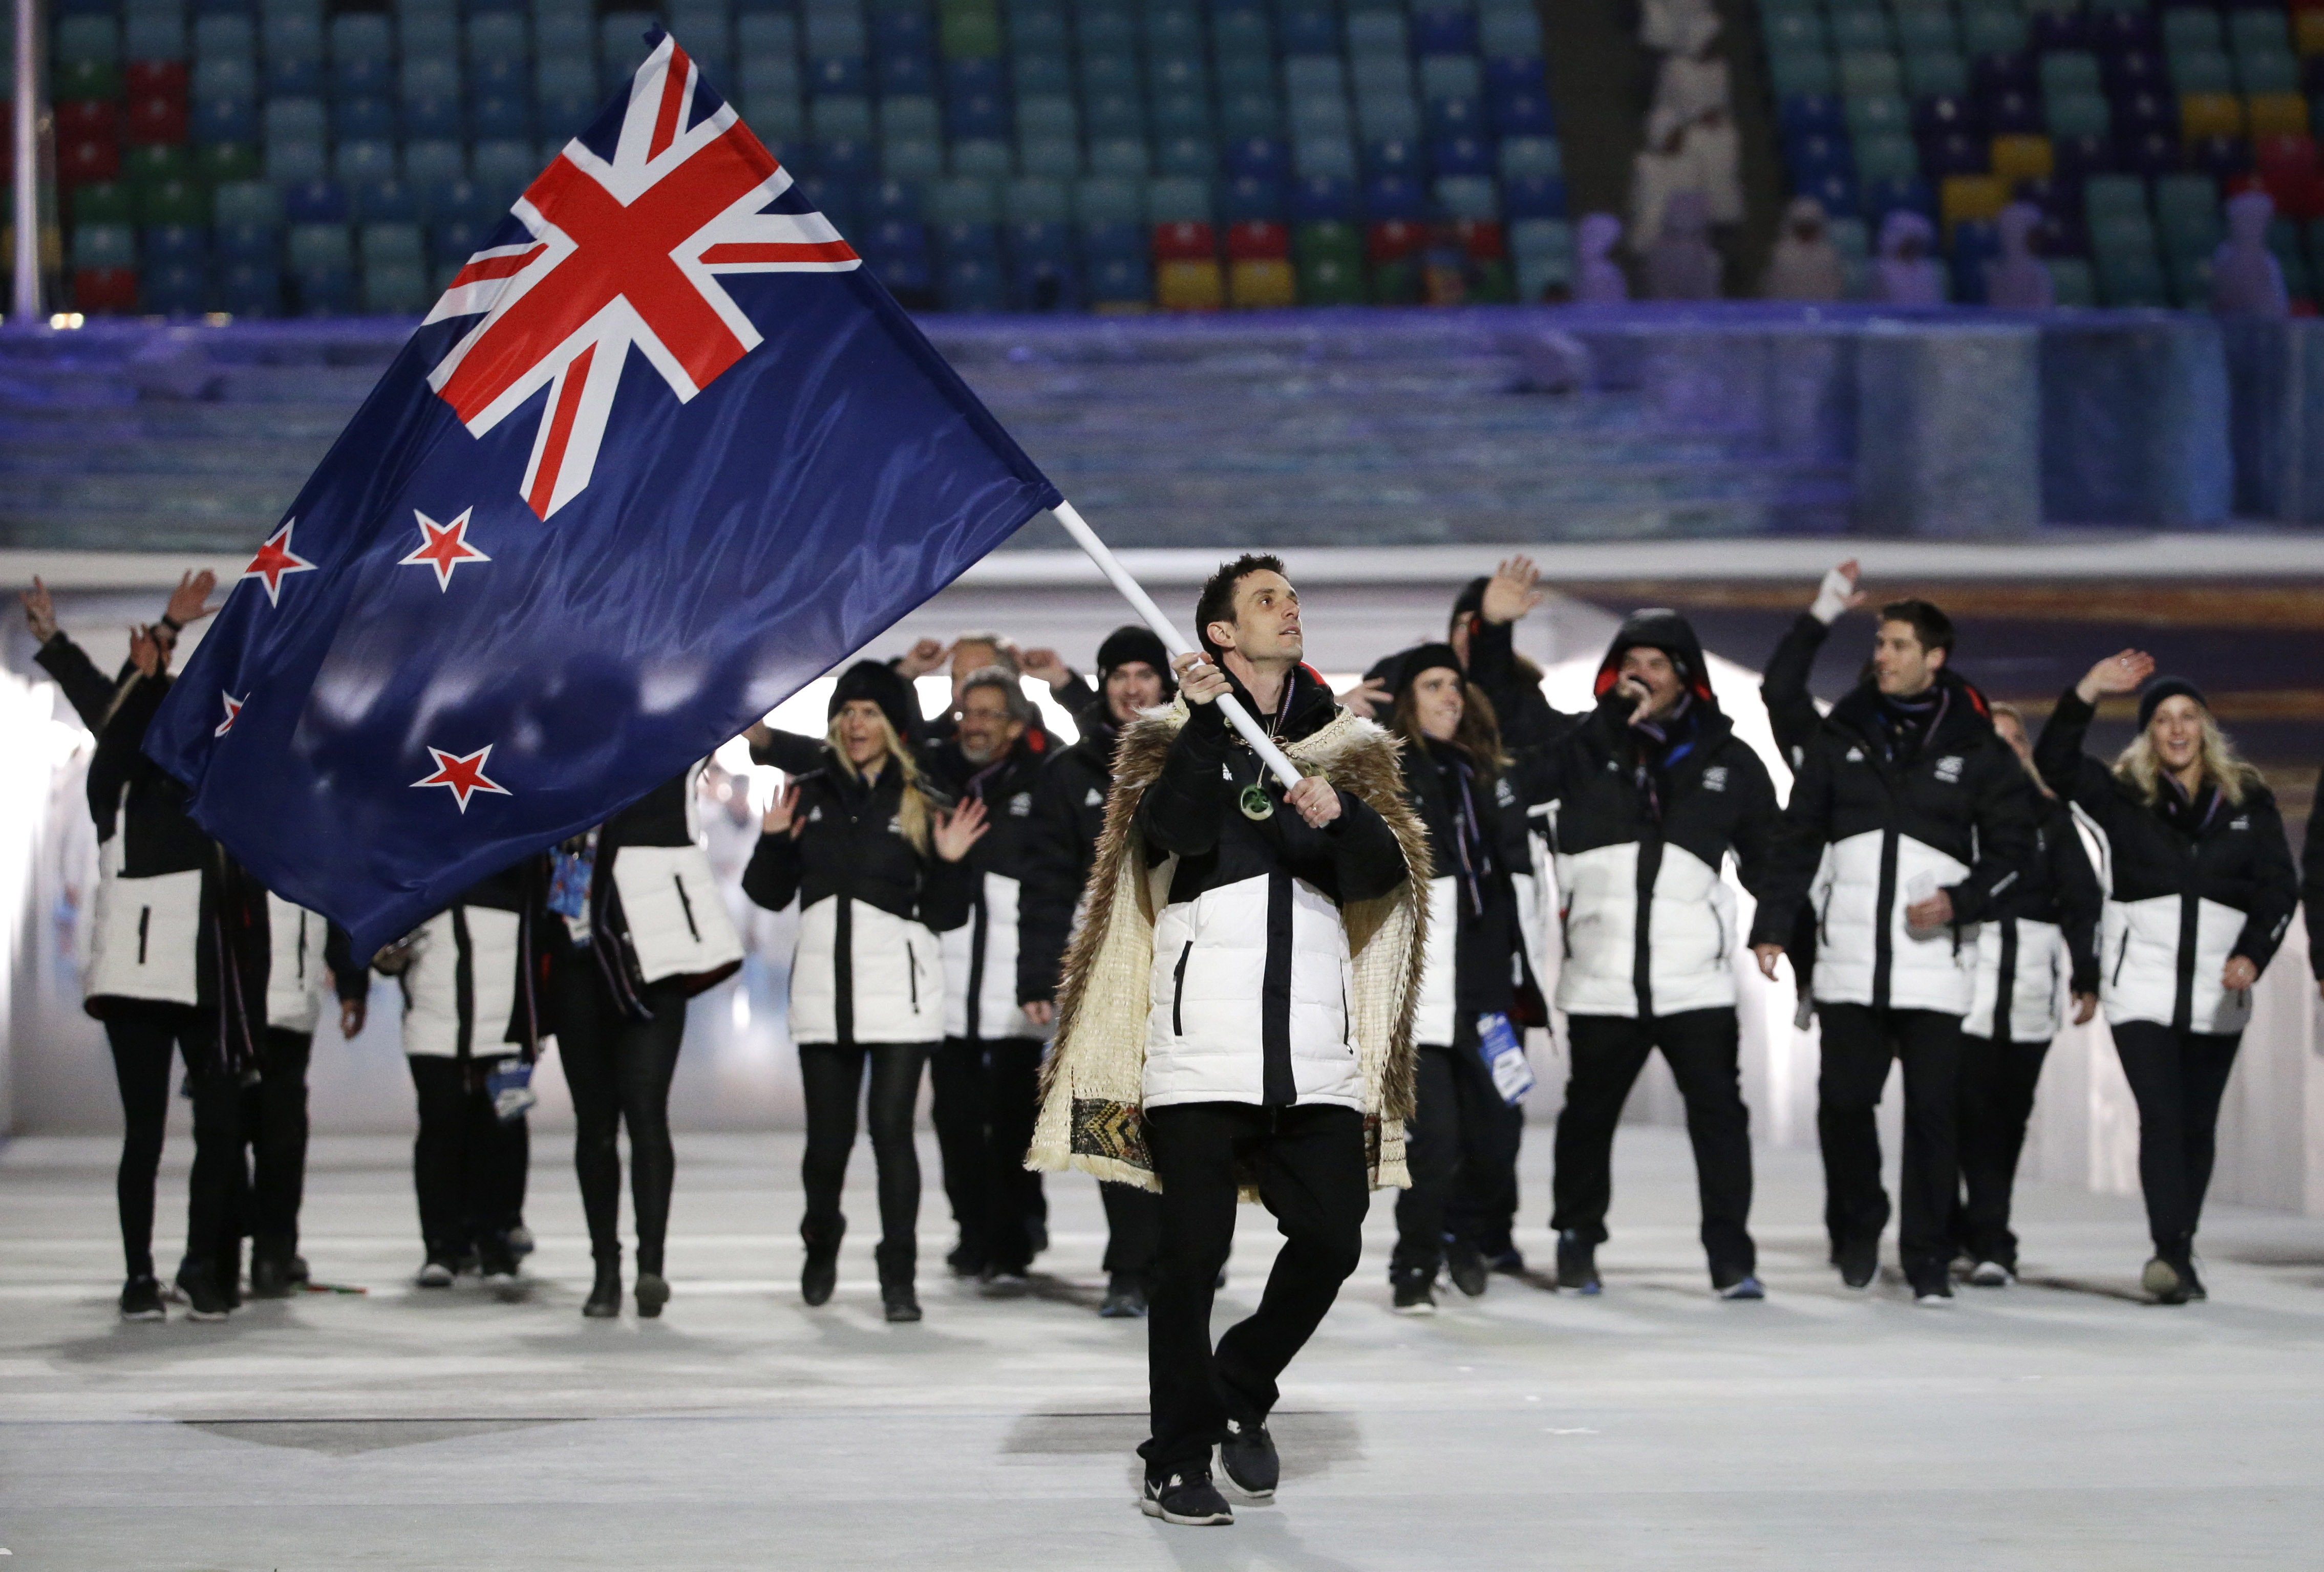 На зимней олимпиаде сборная. Делегации на Олимпийских играх. Зимние Олимпийские игры 2014. Олимпийская сборная новой Зеландии.